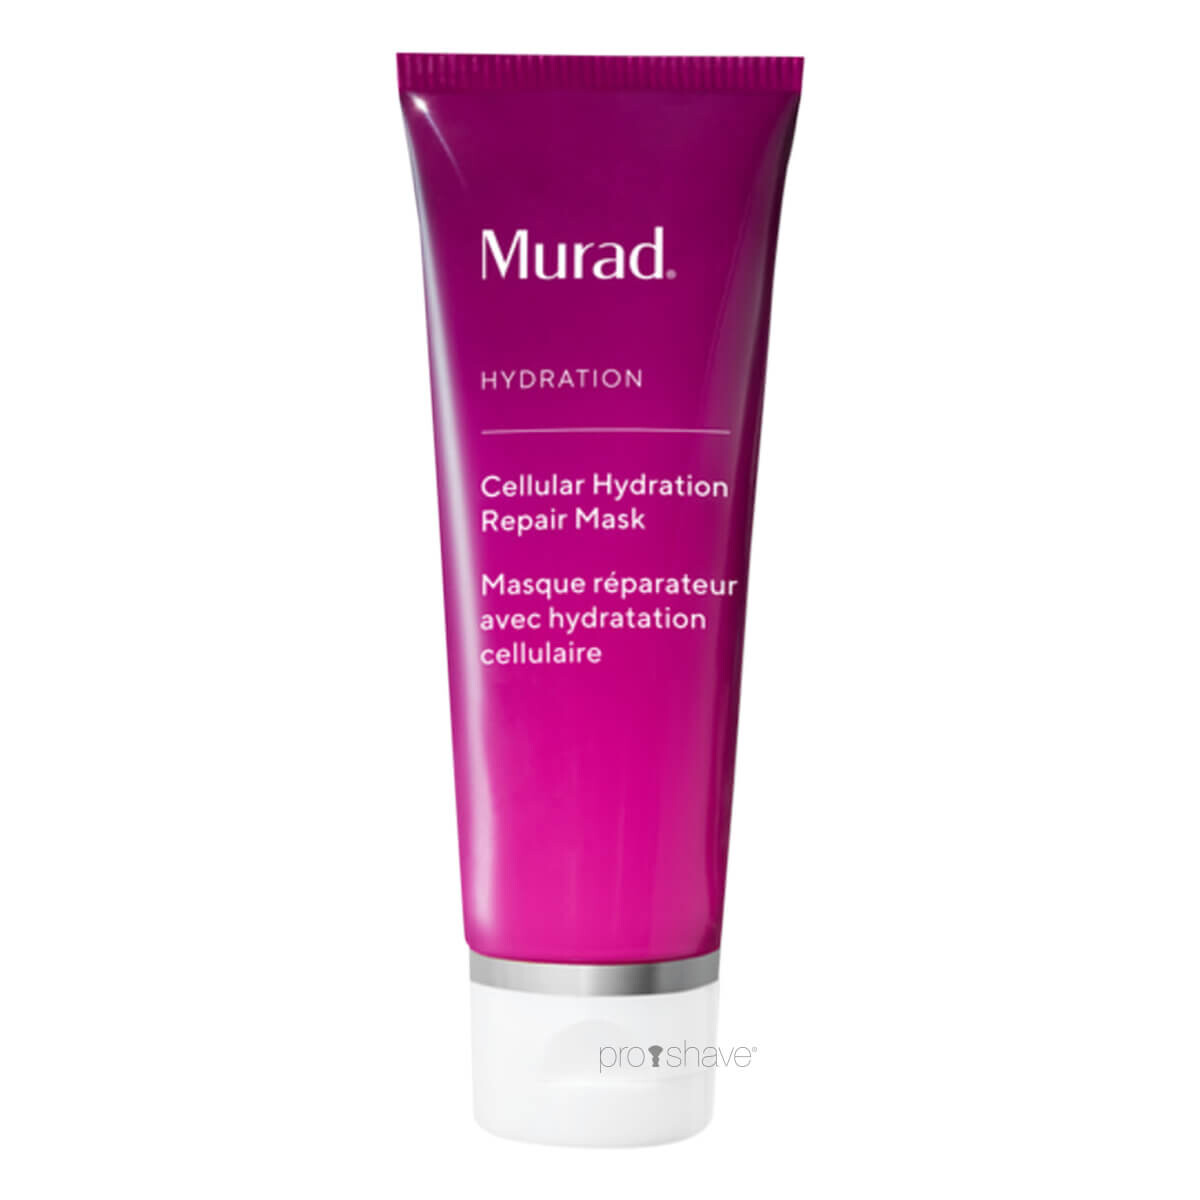 Se Murad Cellular Hydration Repair Mask, Hydration, 80 ml. hos Proshave